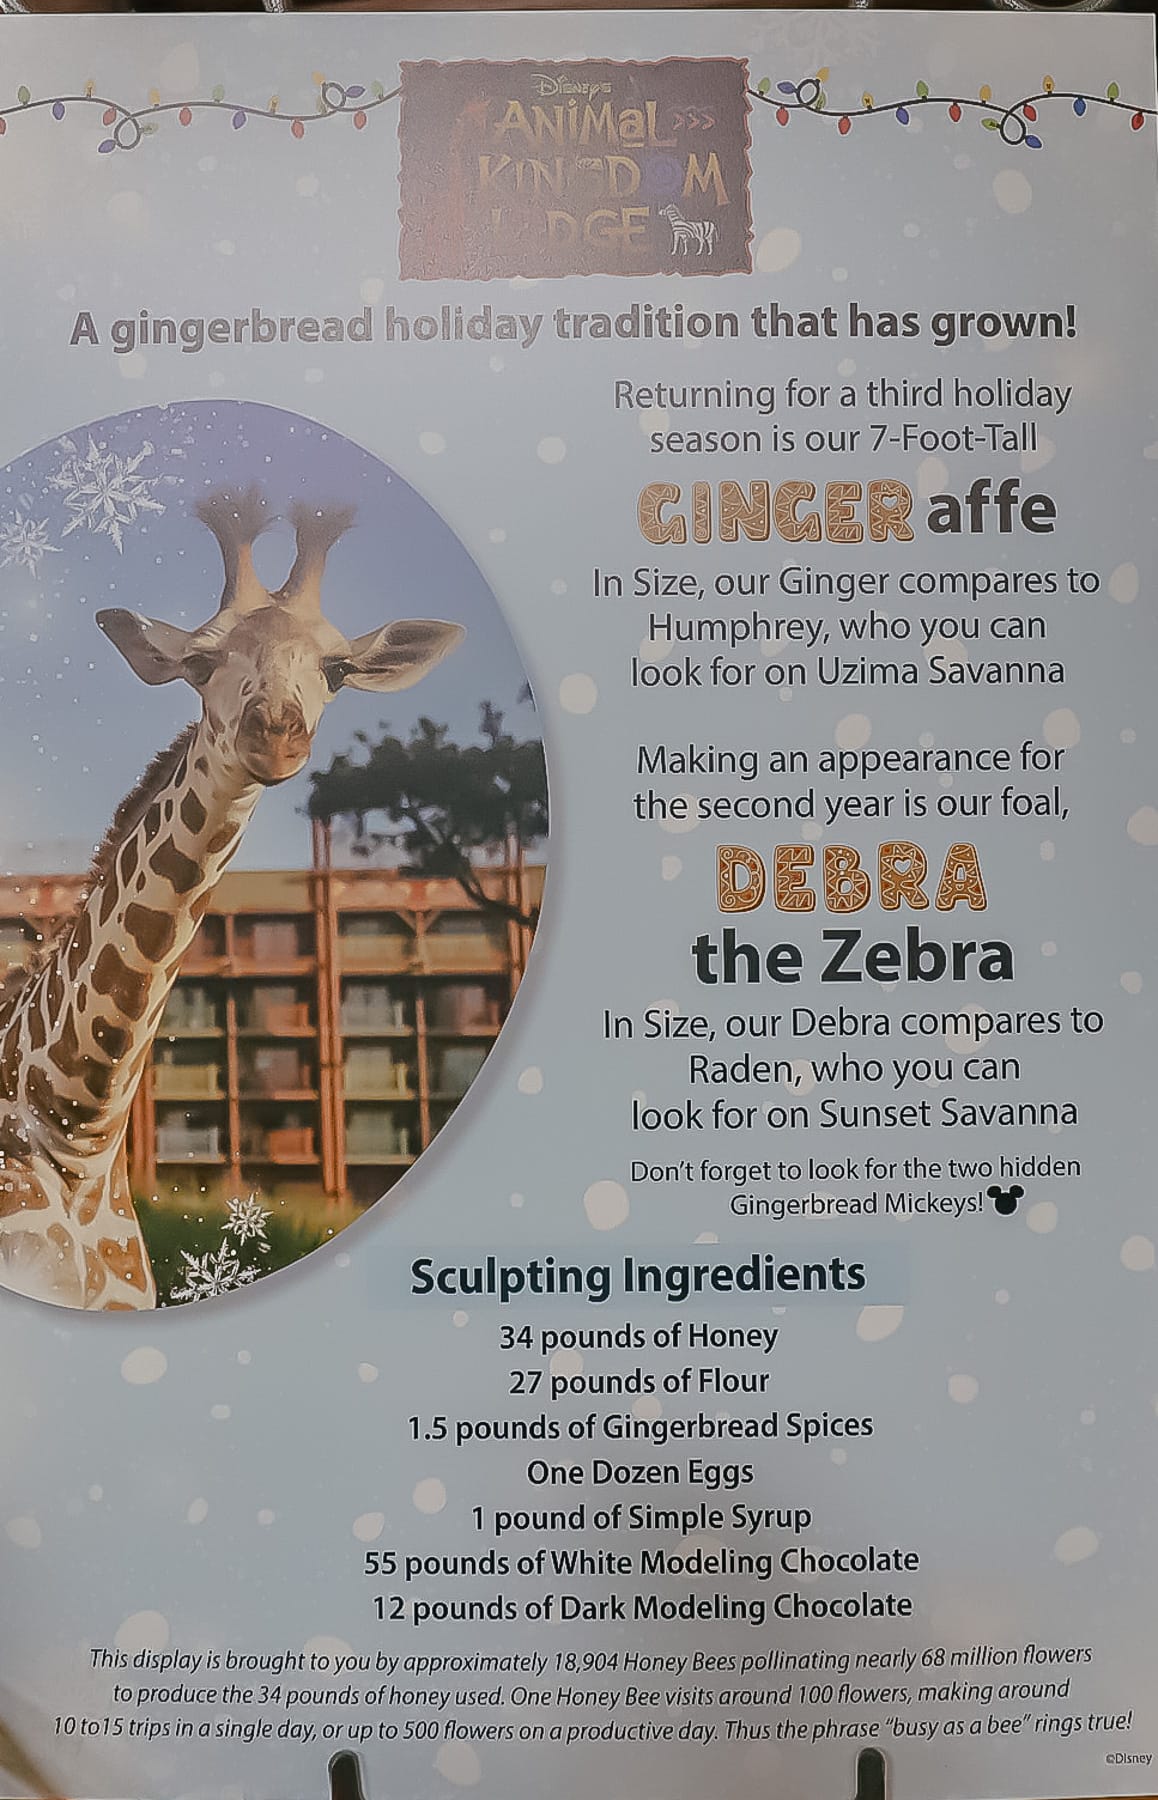 history of the gingerbread display at Disney's Animal Kingdom Lodge 